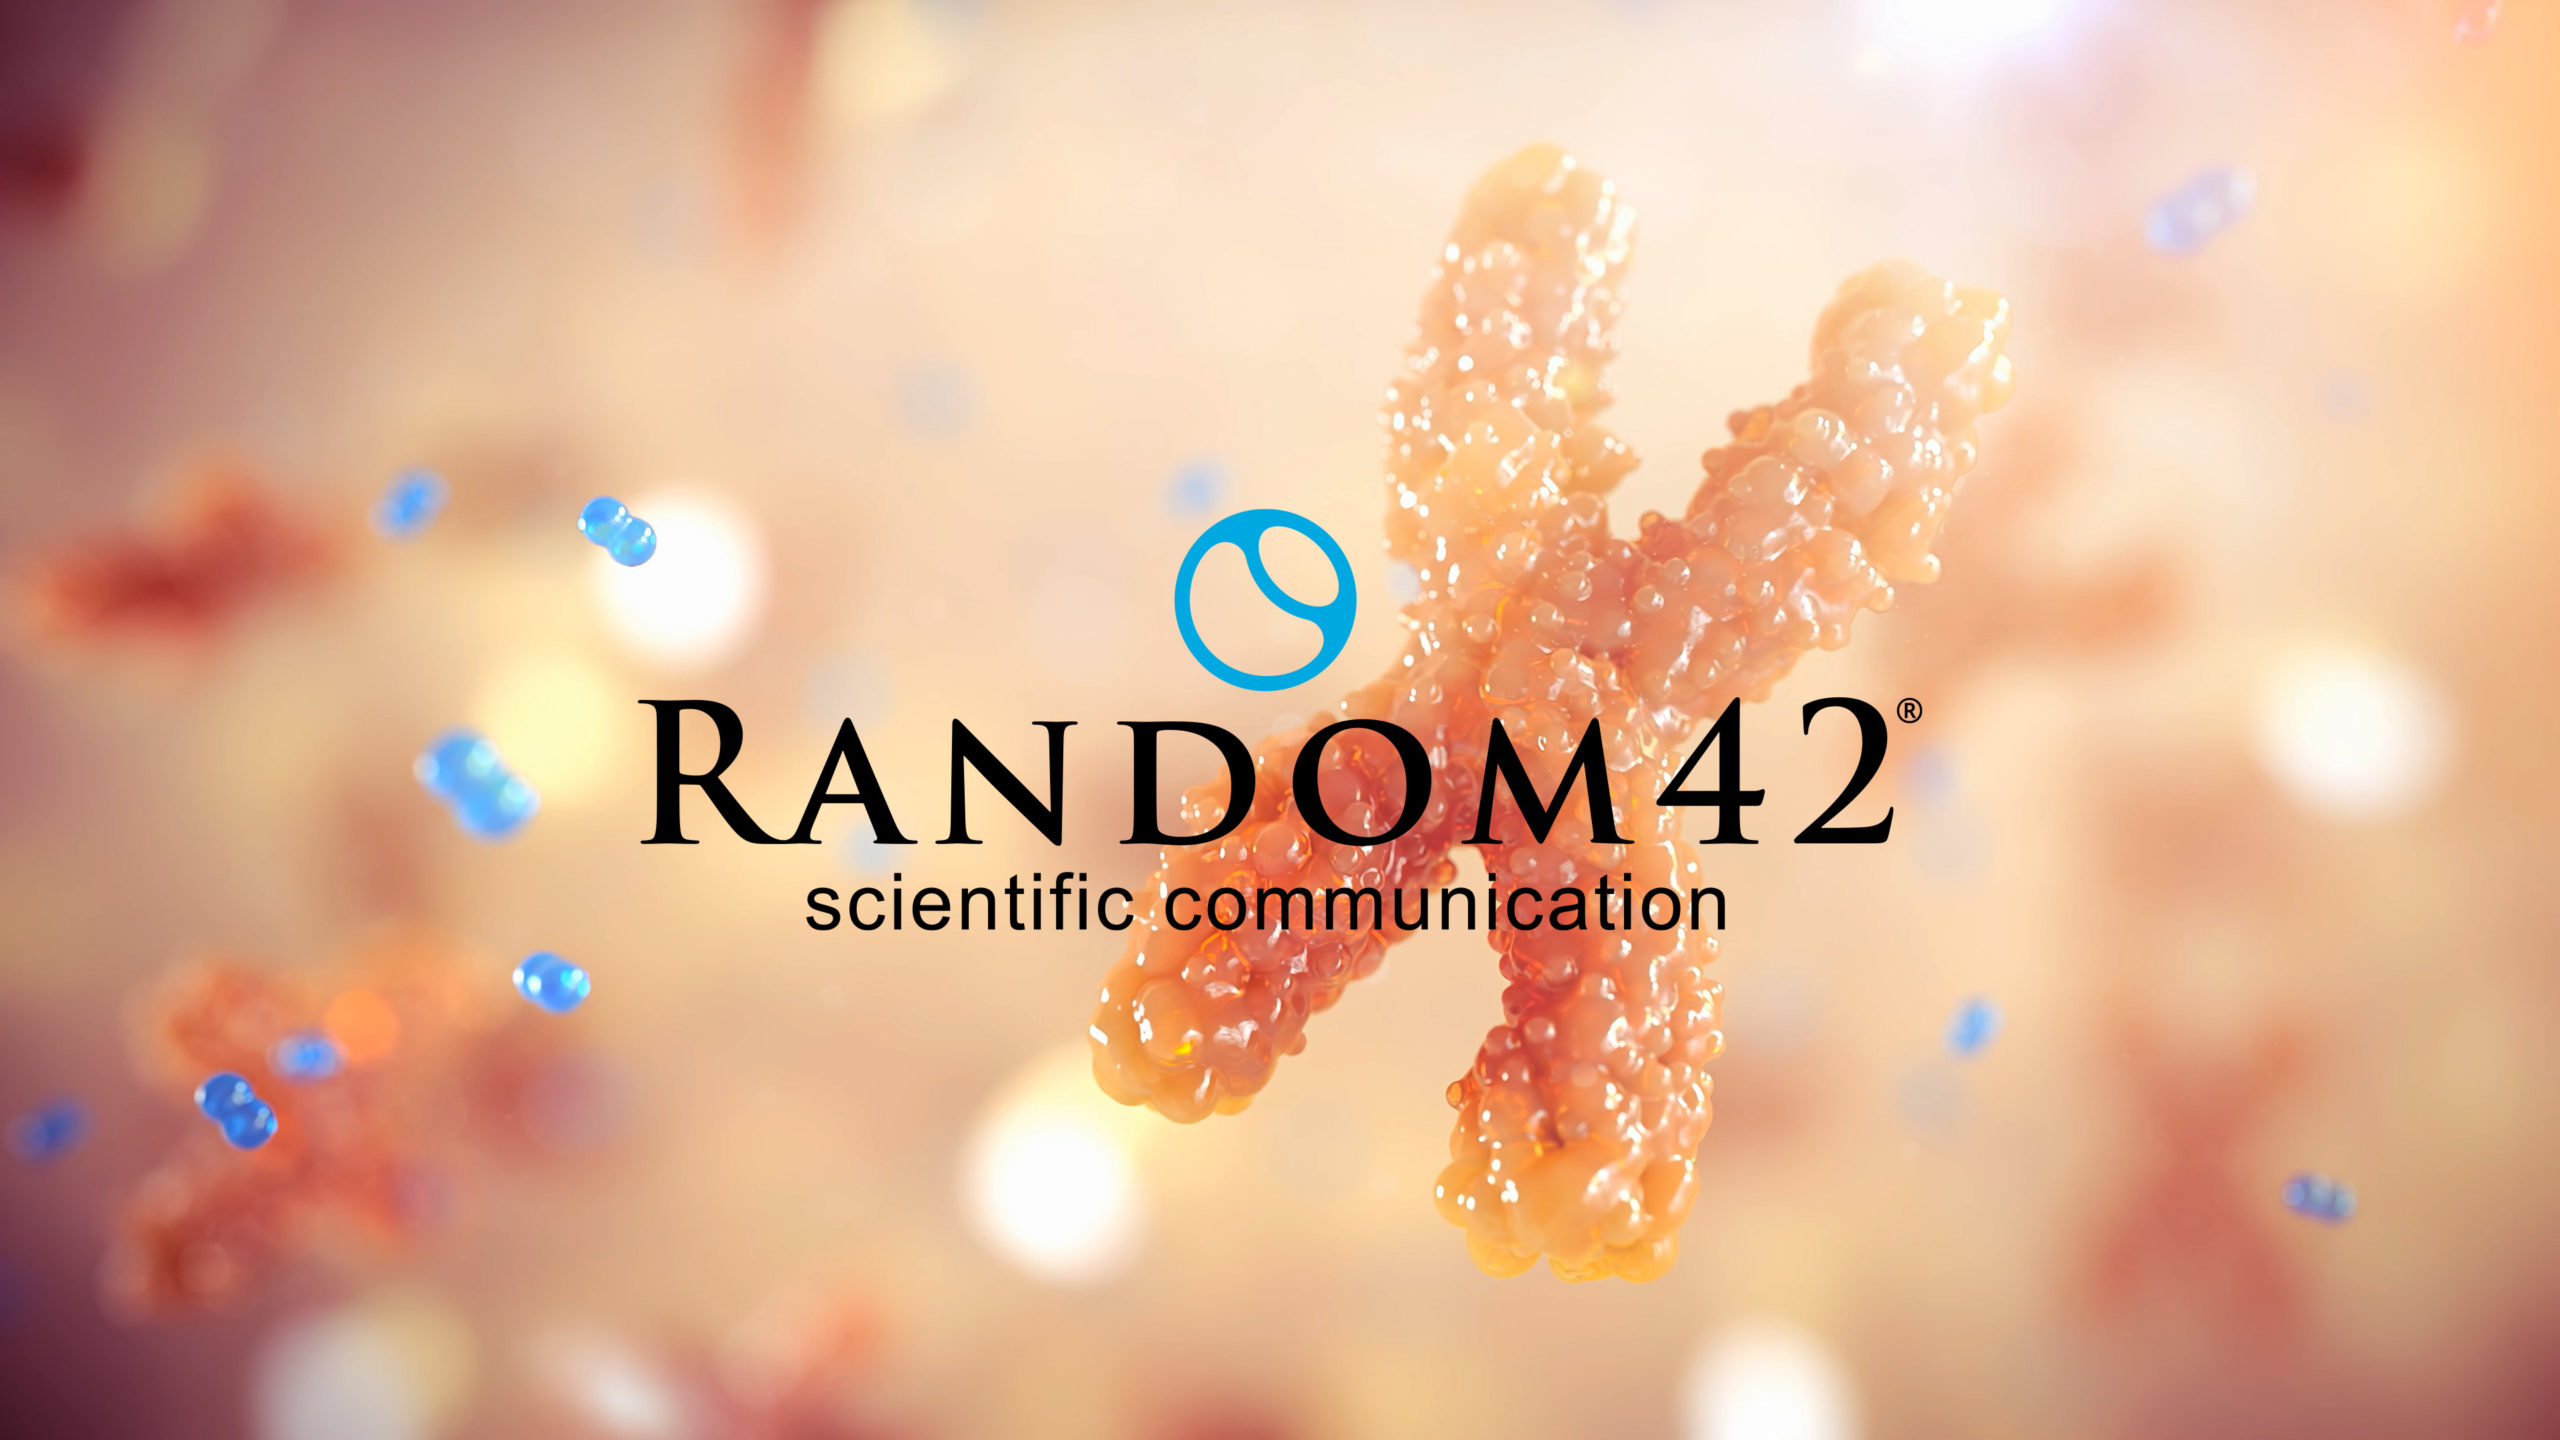 3D Medical Animation | Random42 | Scientific Communication